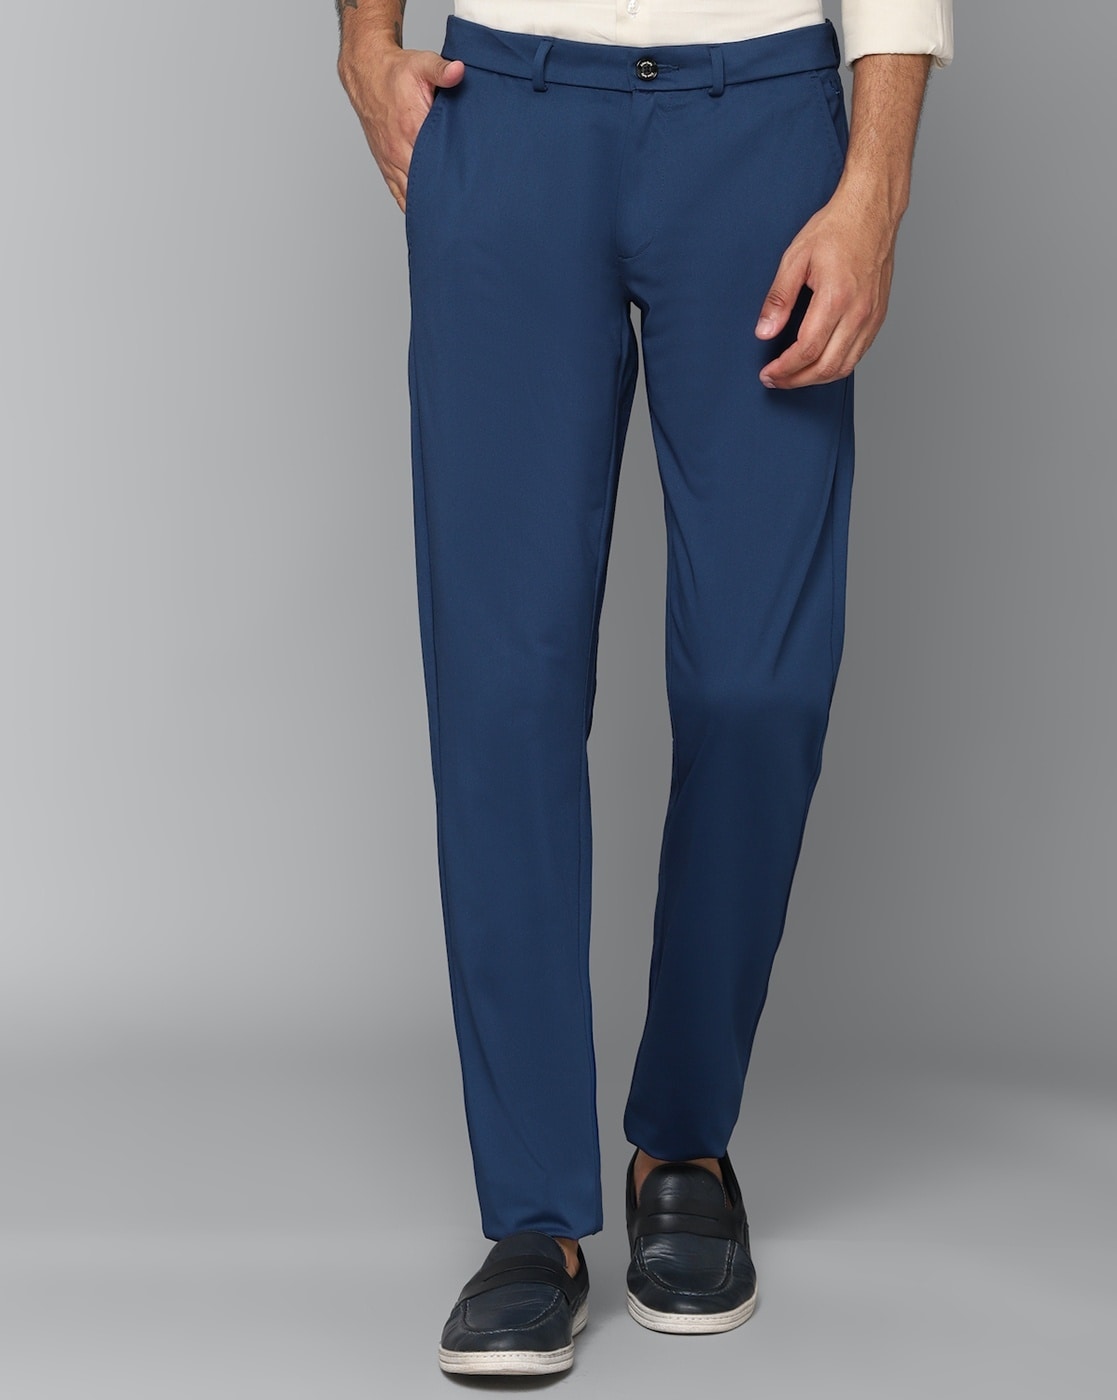 Buy Men Blue Slim Fit Solid Casual Trousers Online  800532  Allen Solly